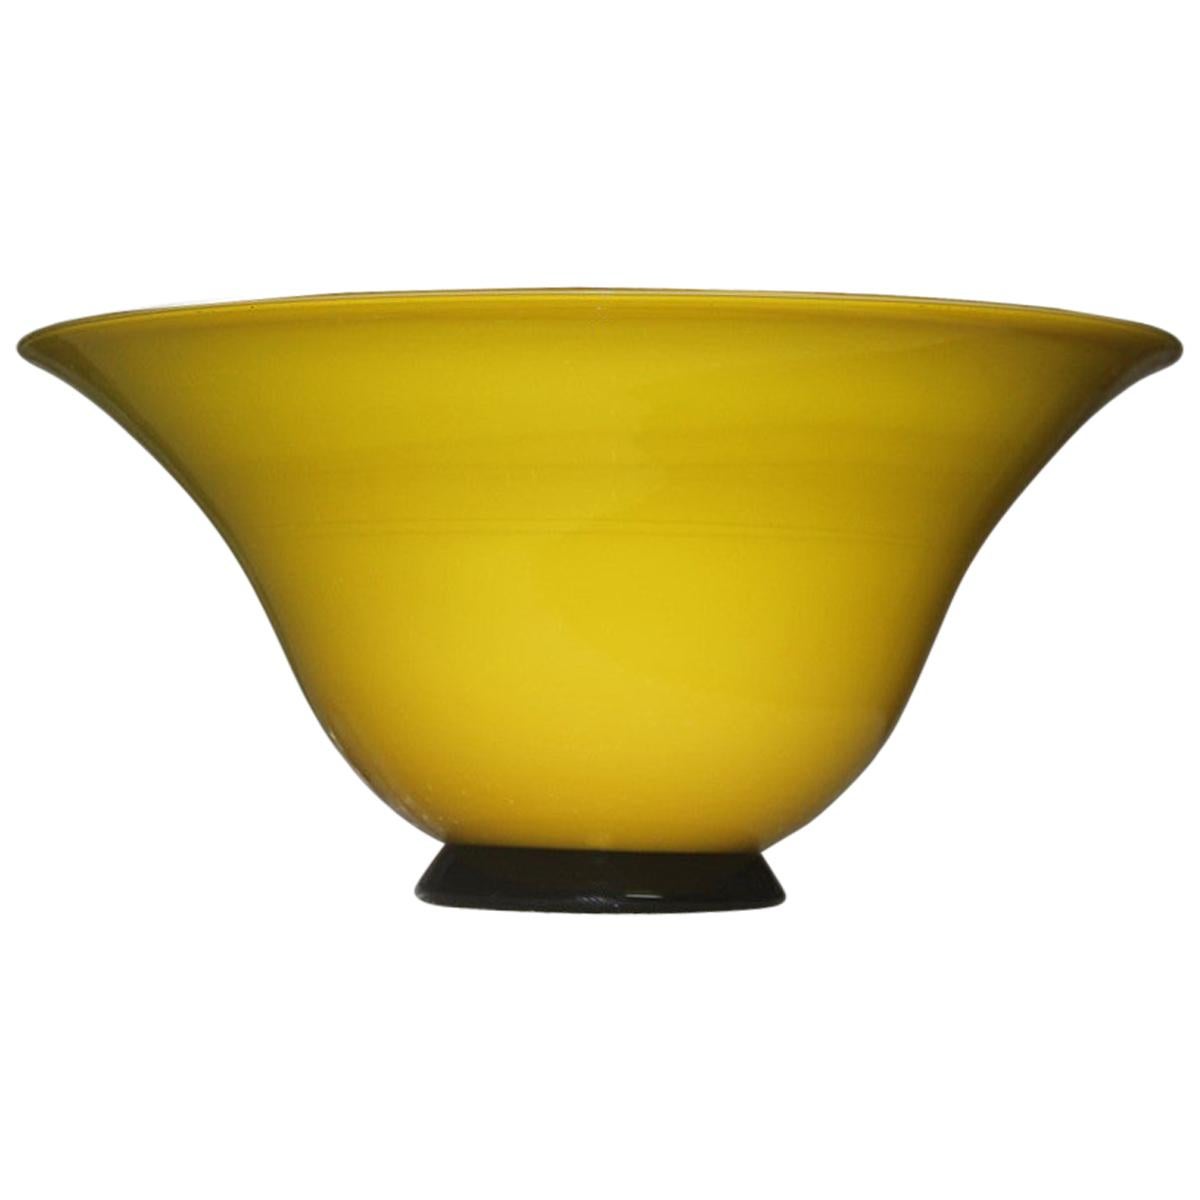 Murano Glass Cup Vase Yellow Black 1989 Mendini Attributed Italian Design